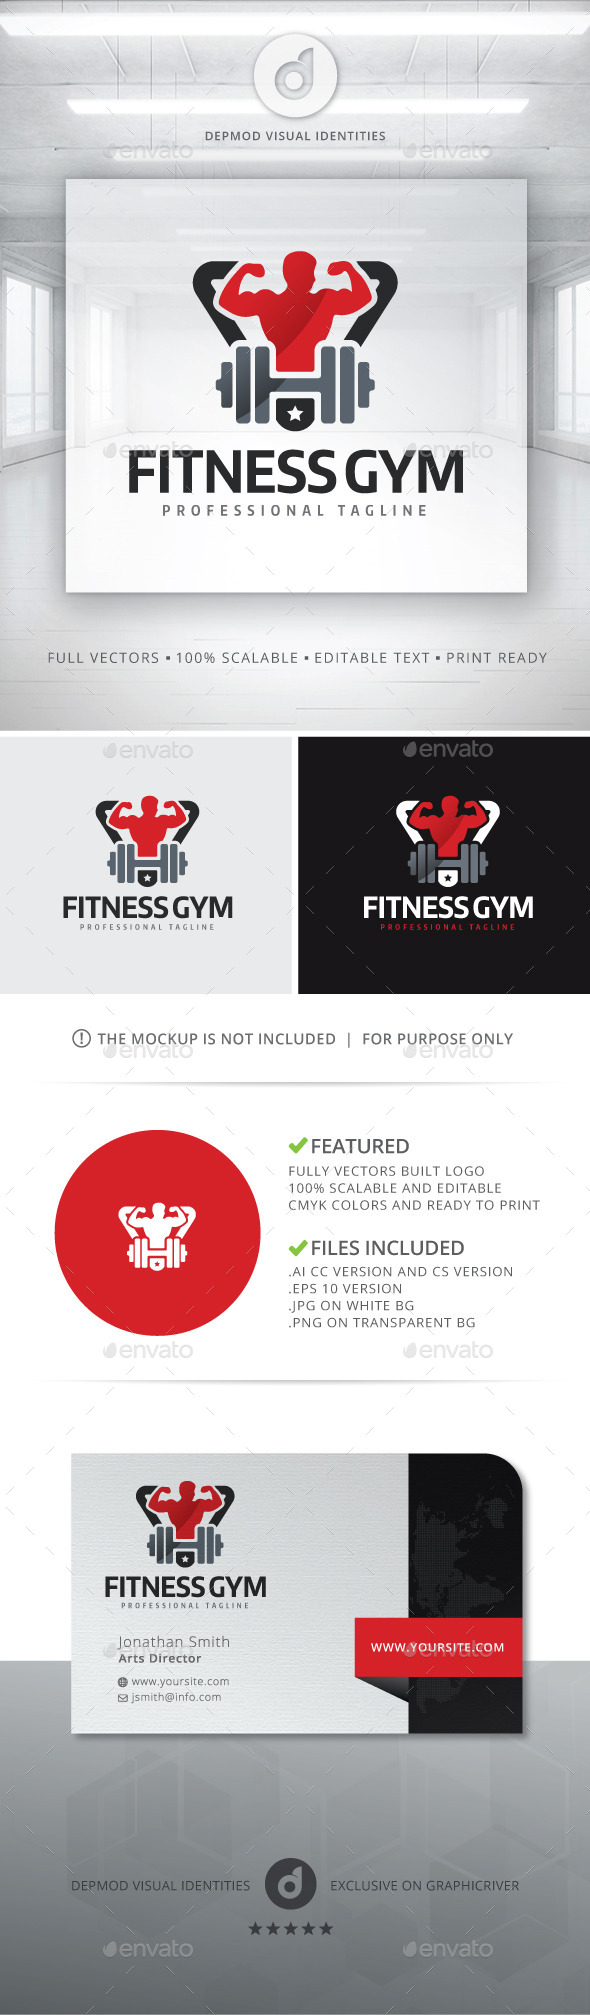 Fitness Gym Logo